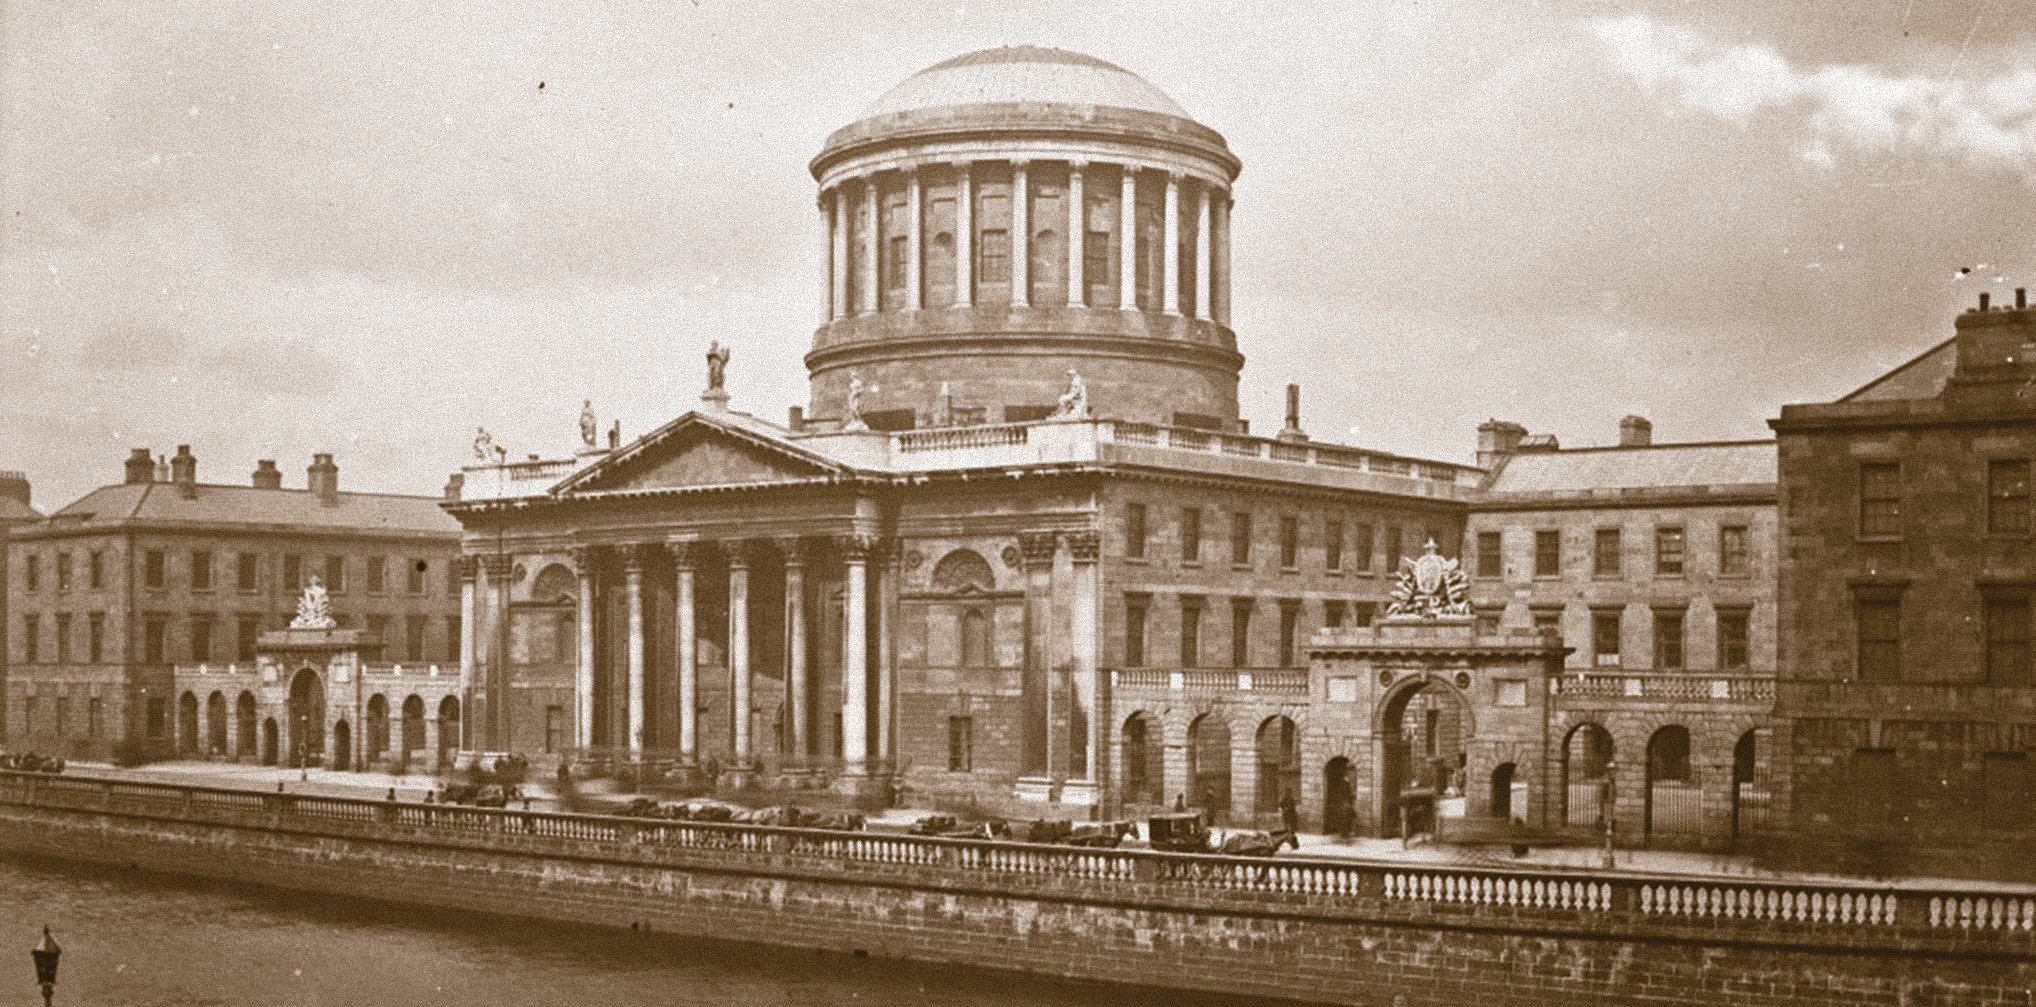 Four Courts Dublin